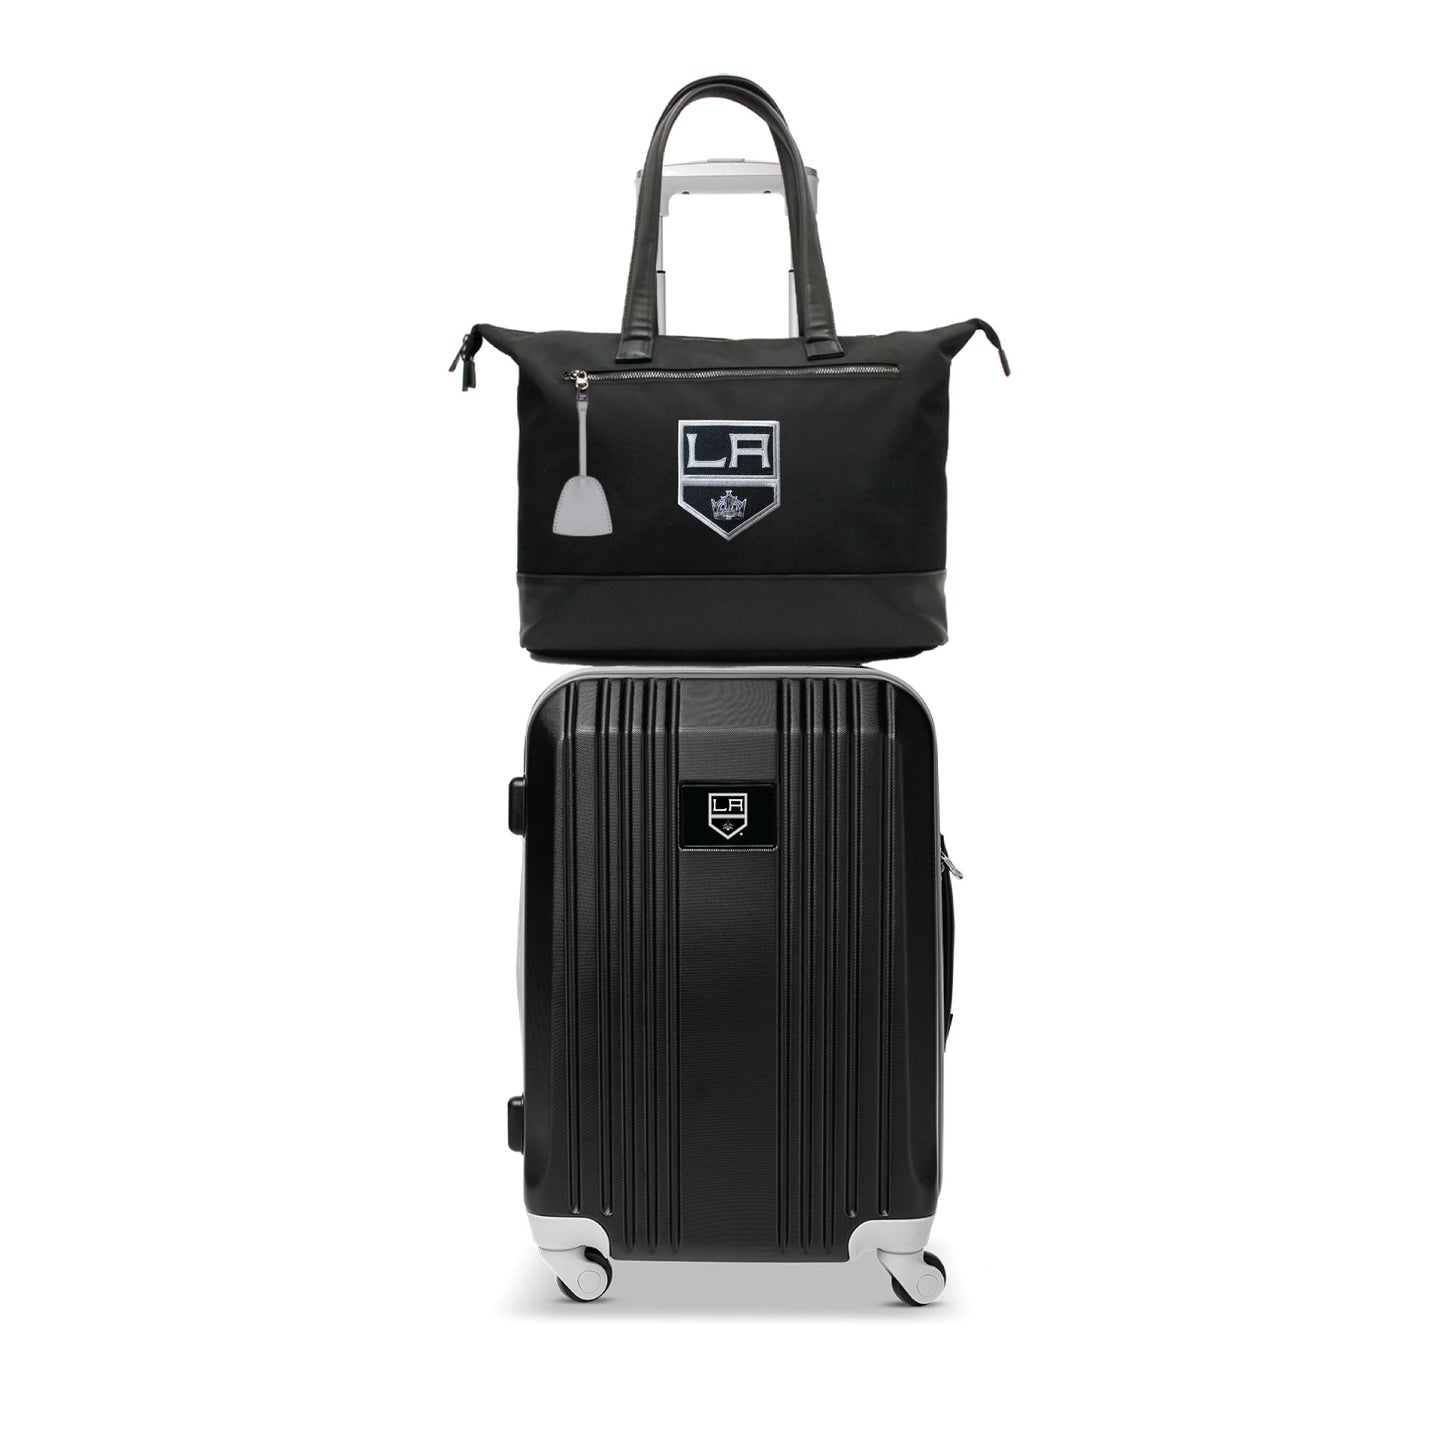 Los Angeles Kings Premium Laptop Tote Bag and Luggage Set